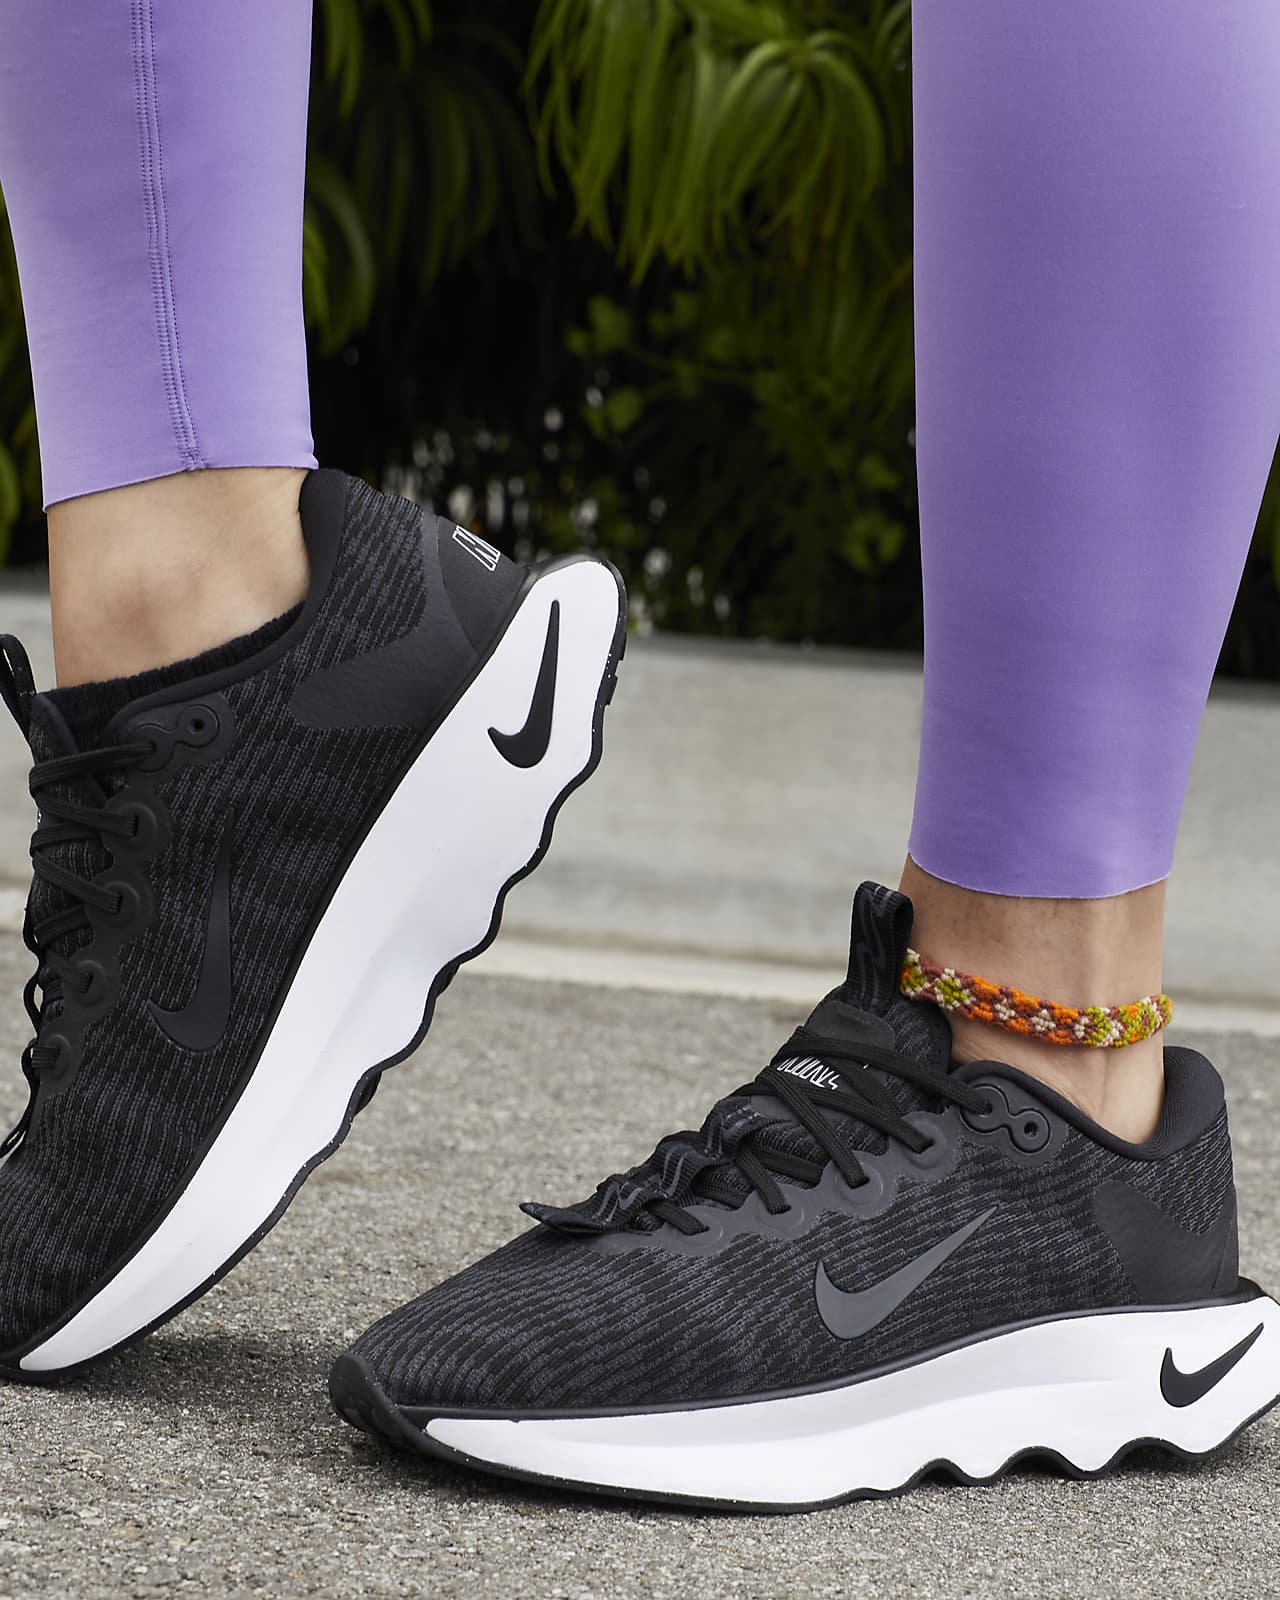 Nike Motiva Women's Walking Shoes.